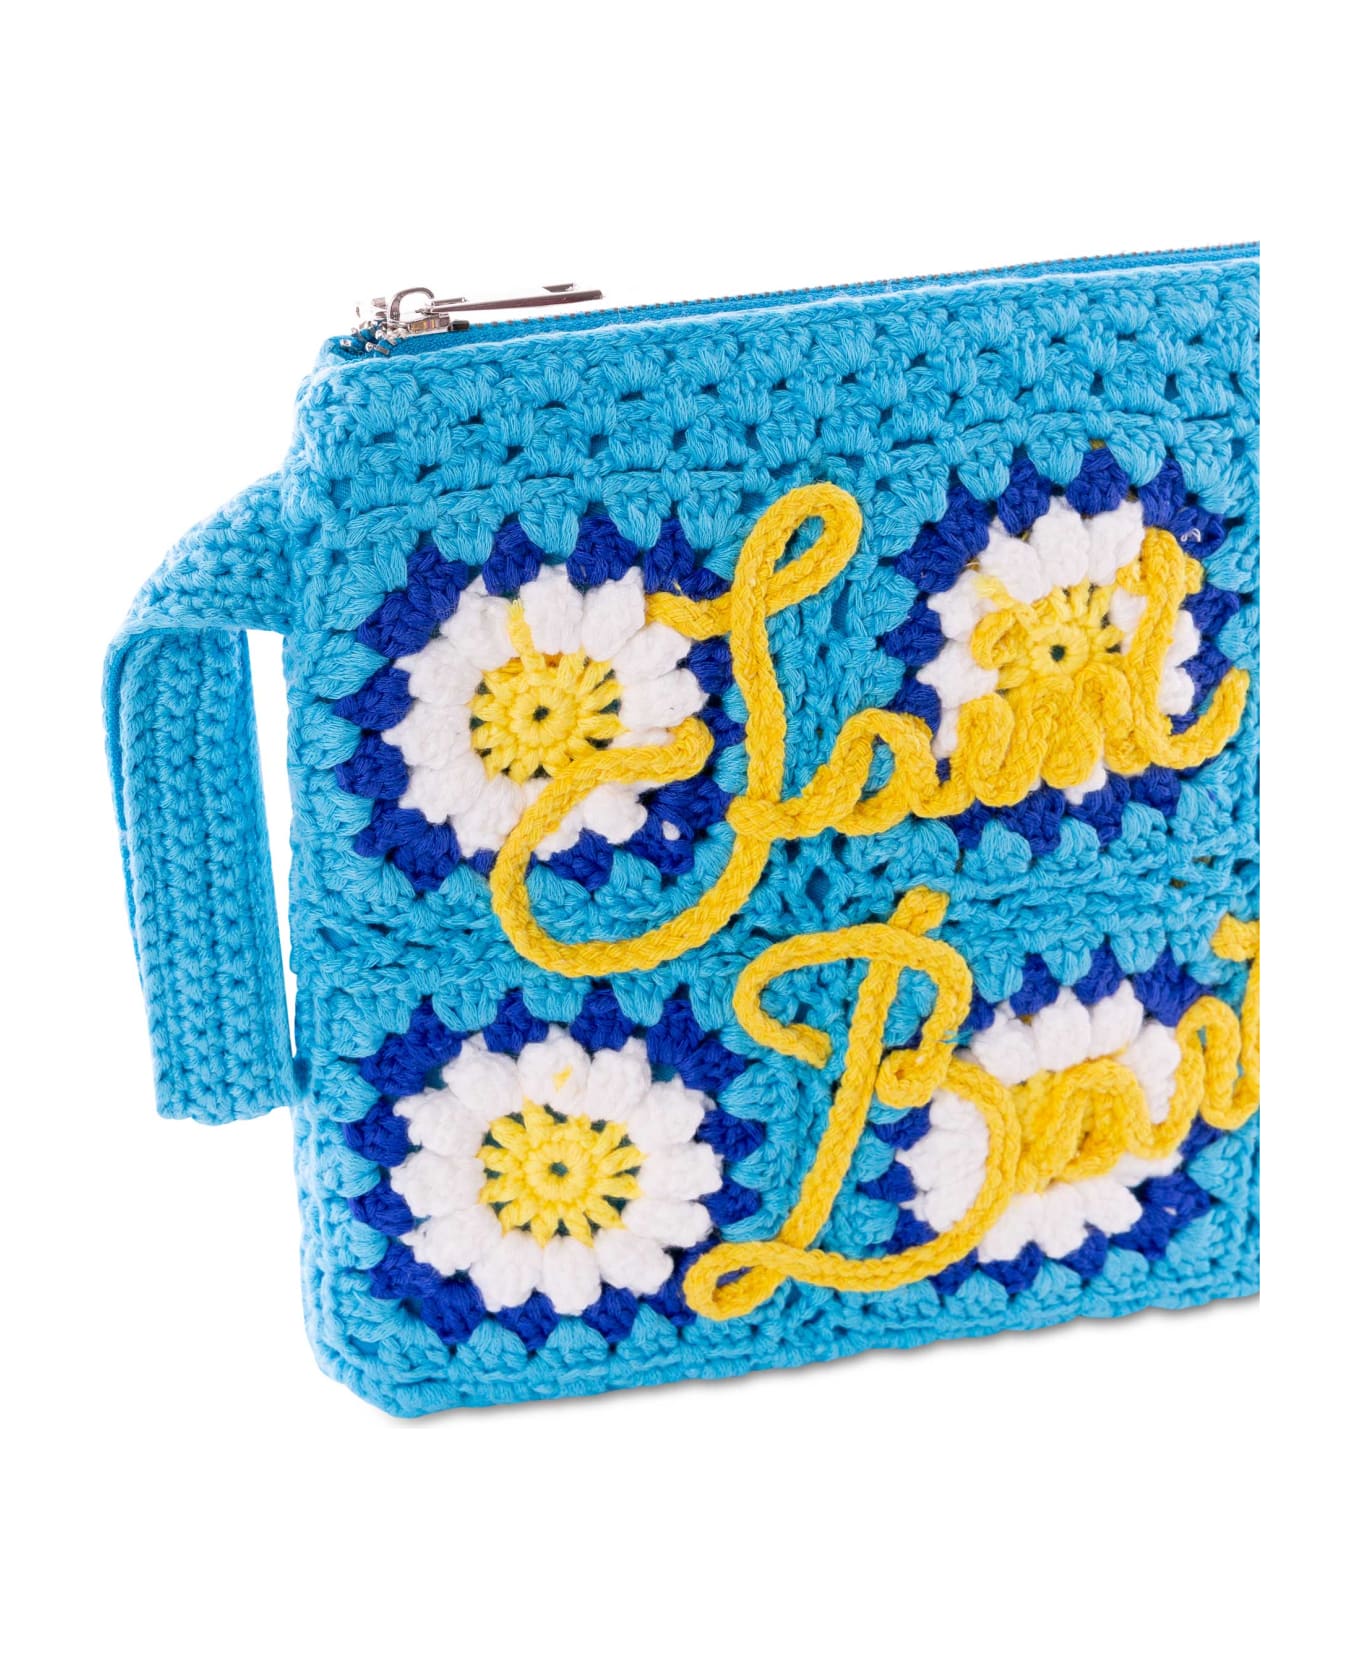 MC2 Saint Barth Parisienne Crochet Pouch Bag With Daisy Embroidery - BLUE